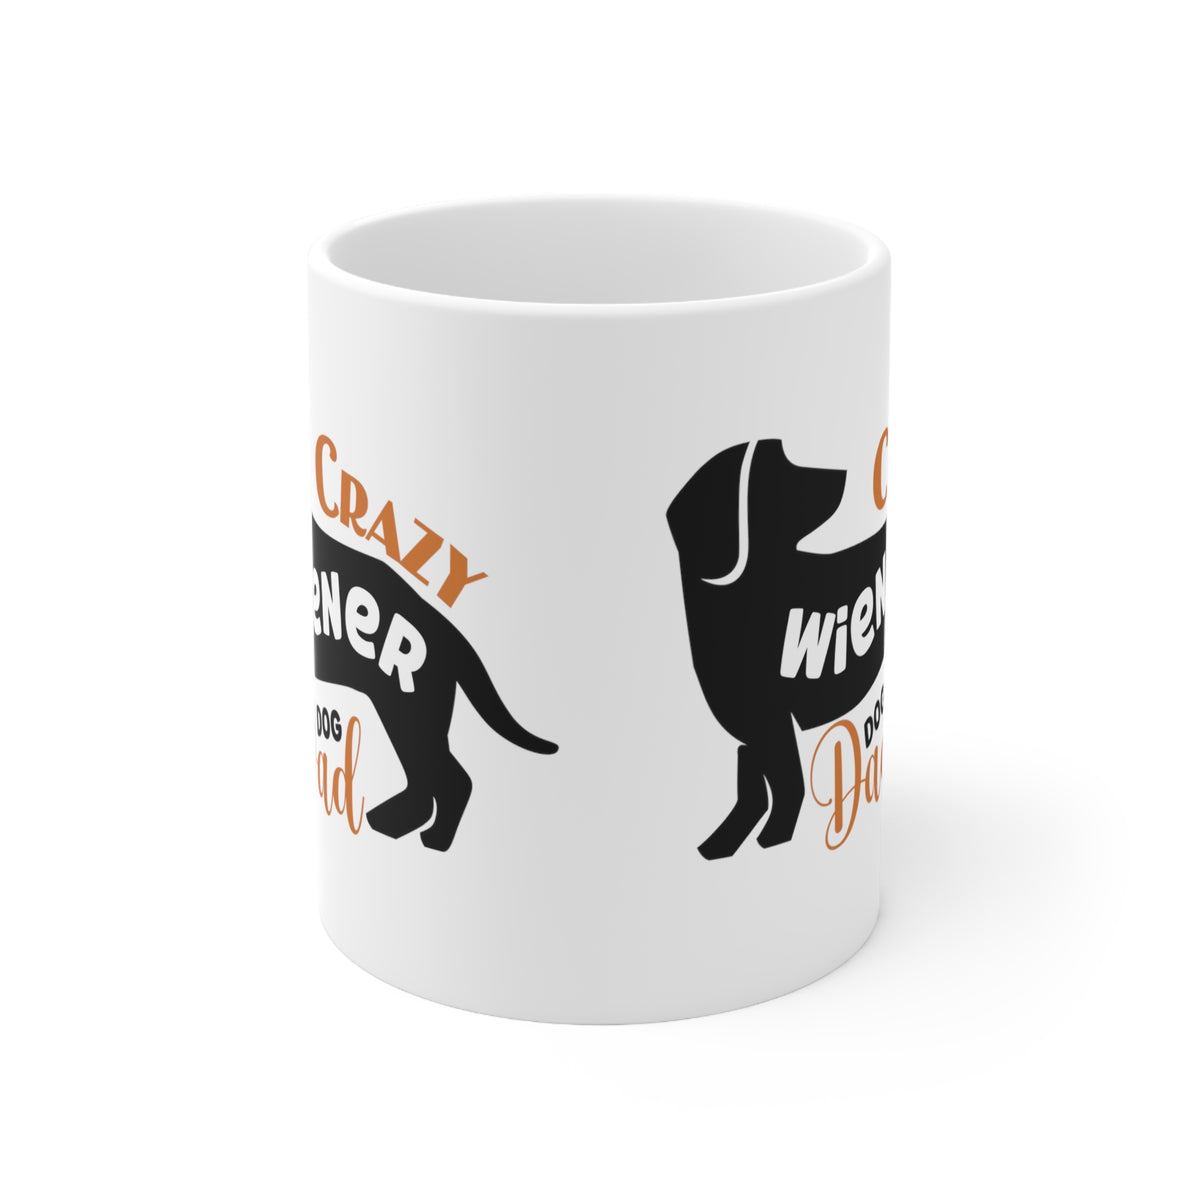 Dachshund Mugs / Dachshund Dog Mugs